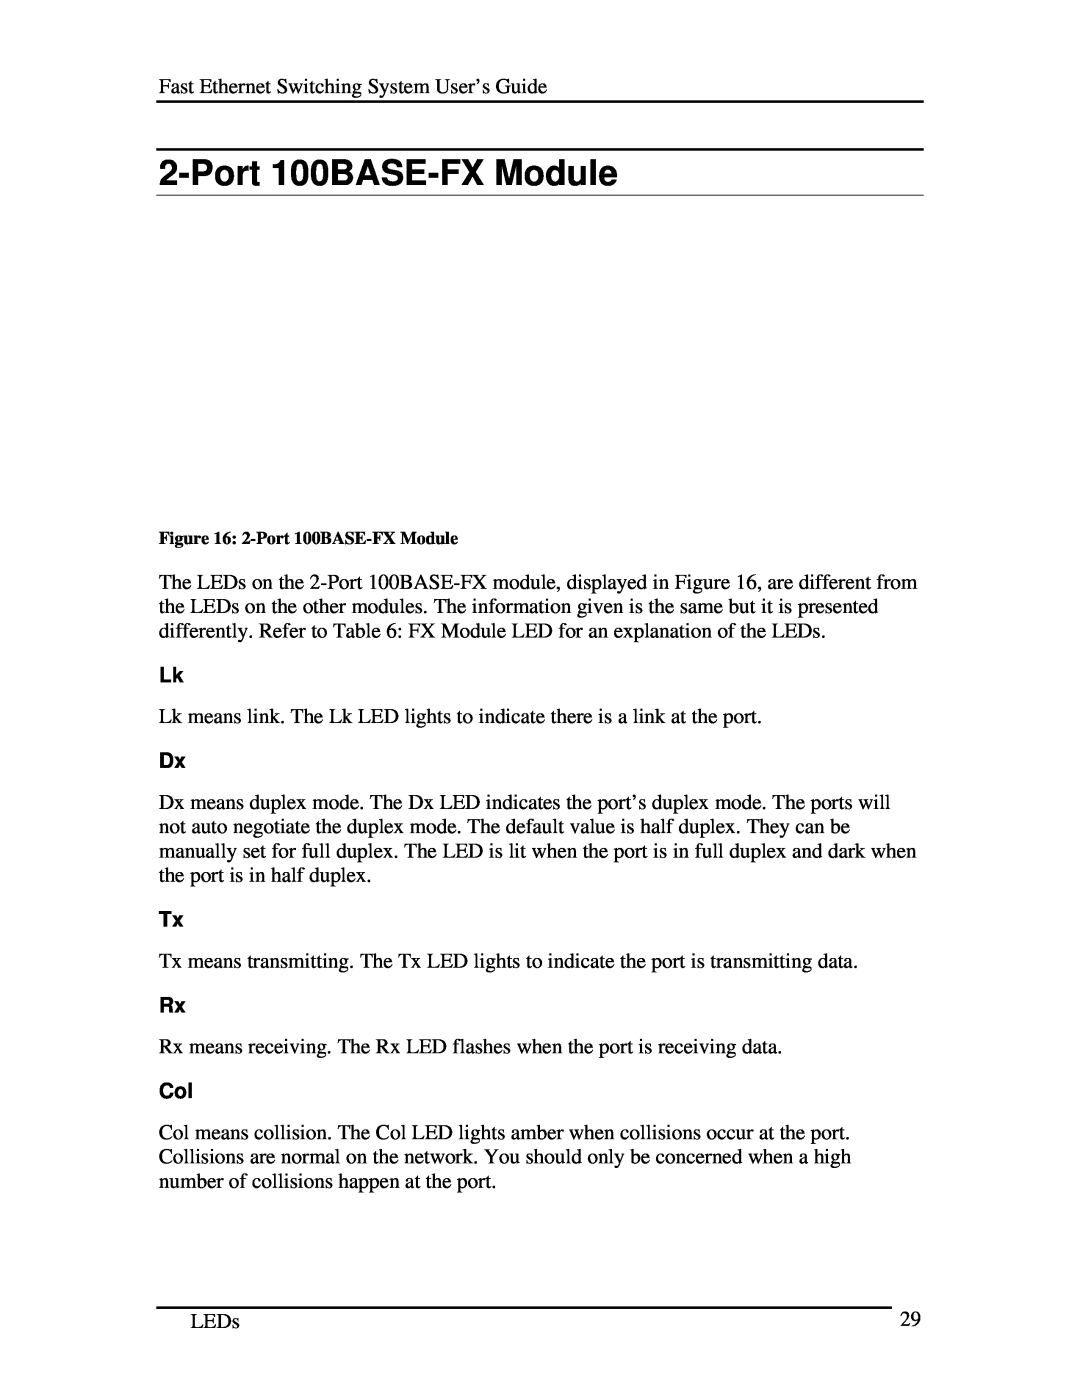 D-Link DES-5016 manual Port 100BASE-FX Module 